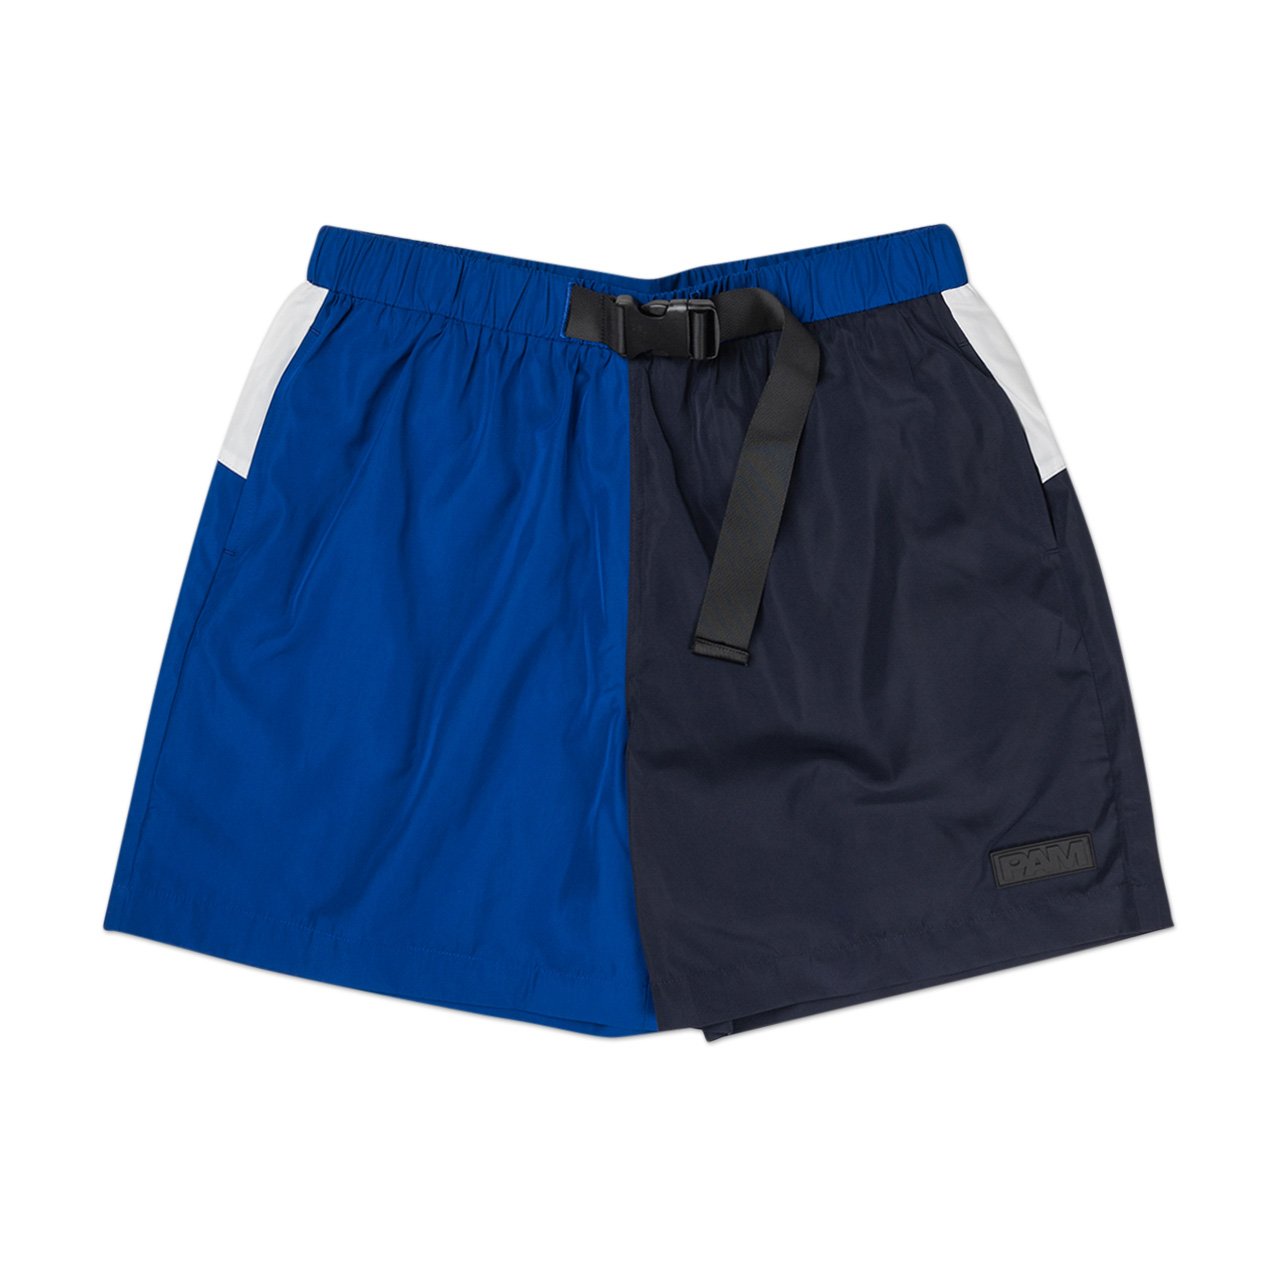 perks and mini s.loops swim shorts (blue) - 8353-b-nm - a.plus - Image - 1